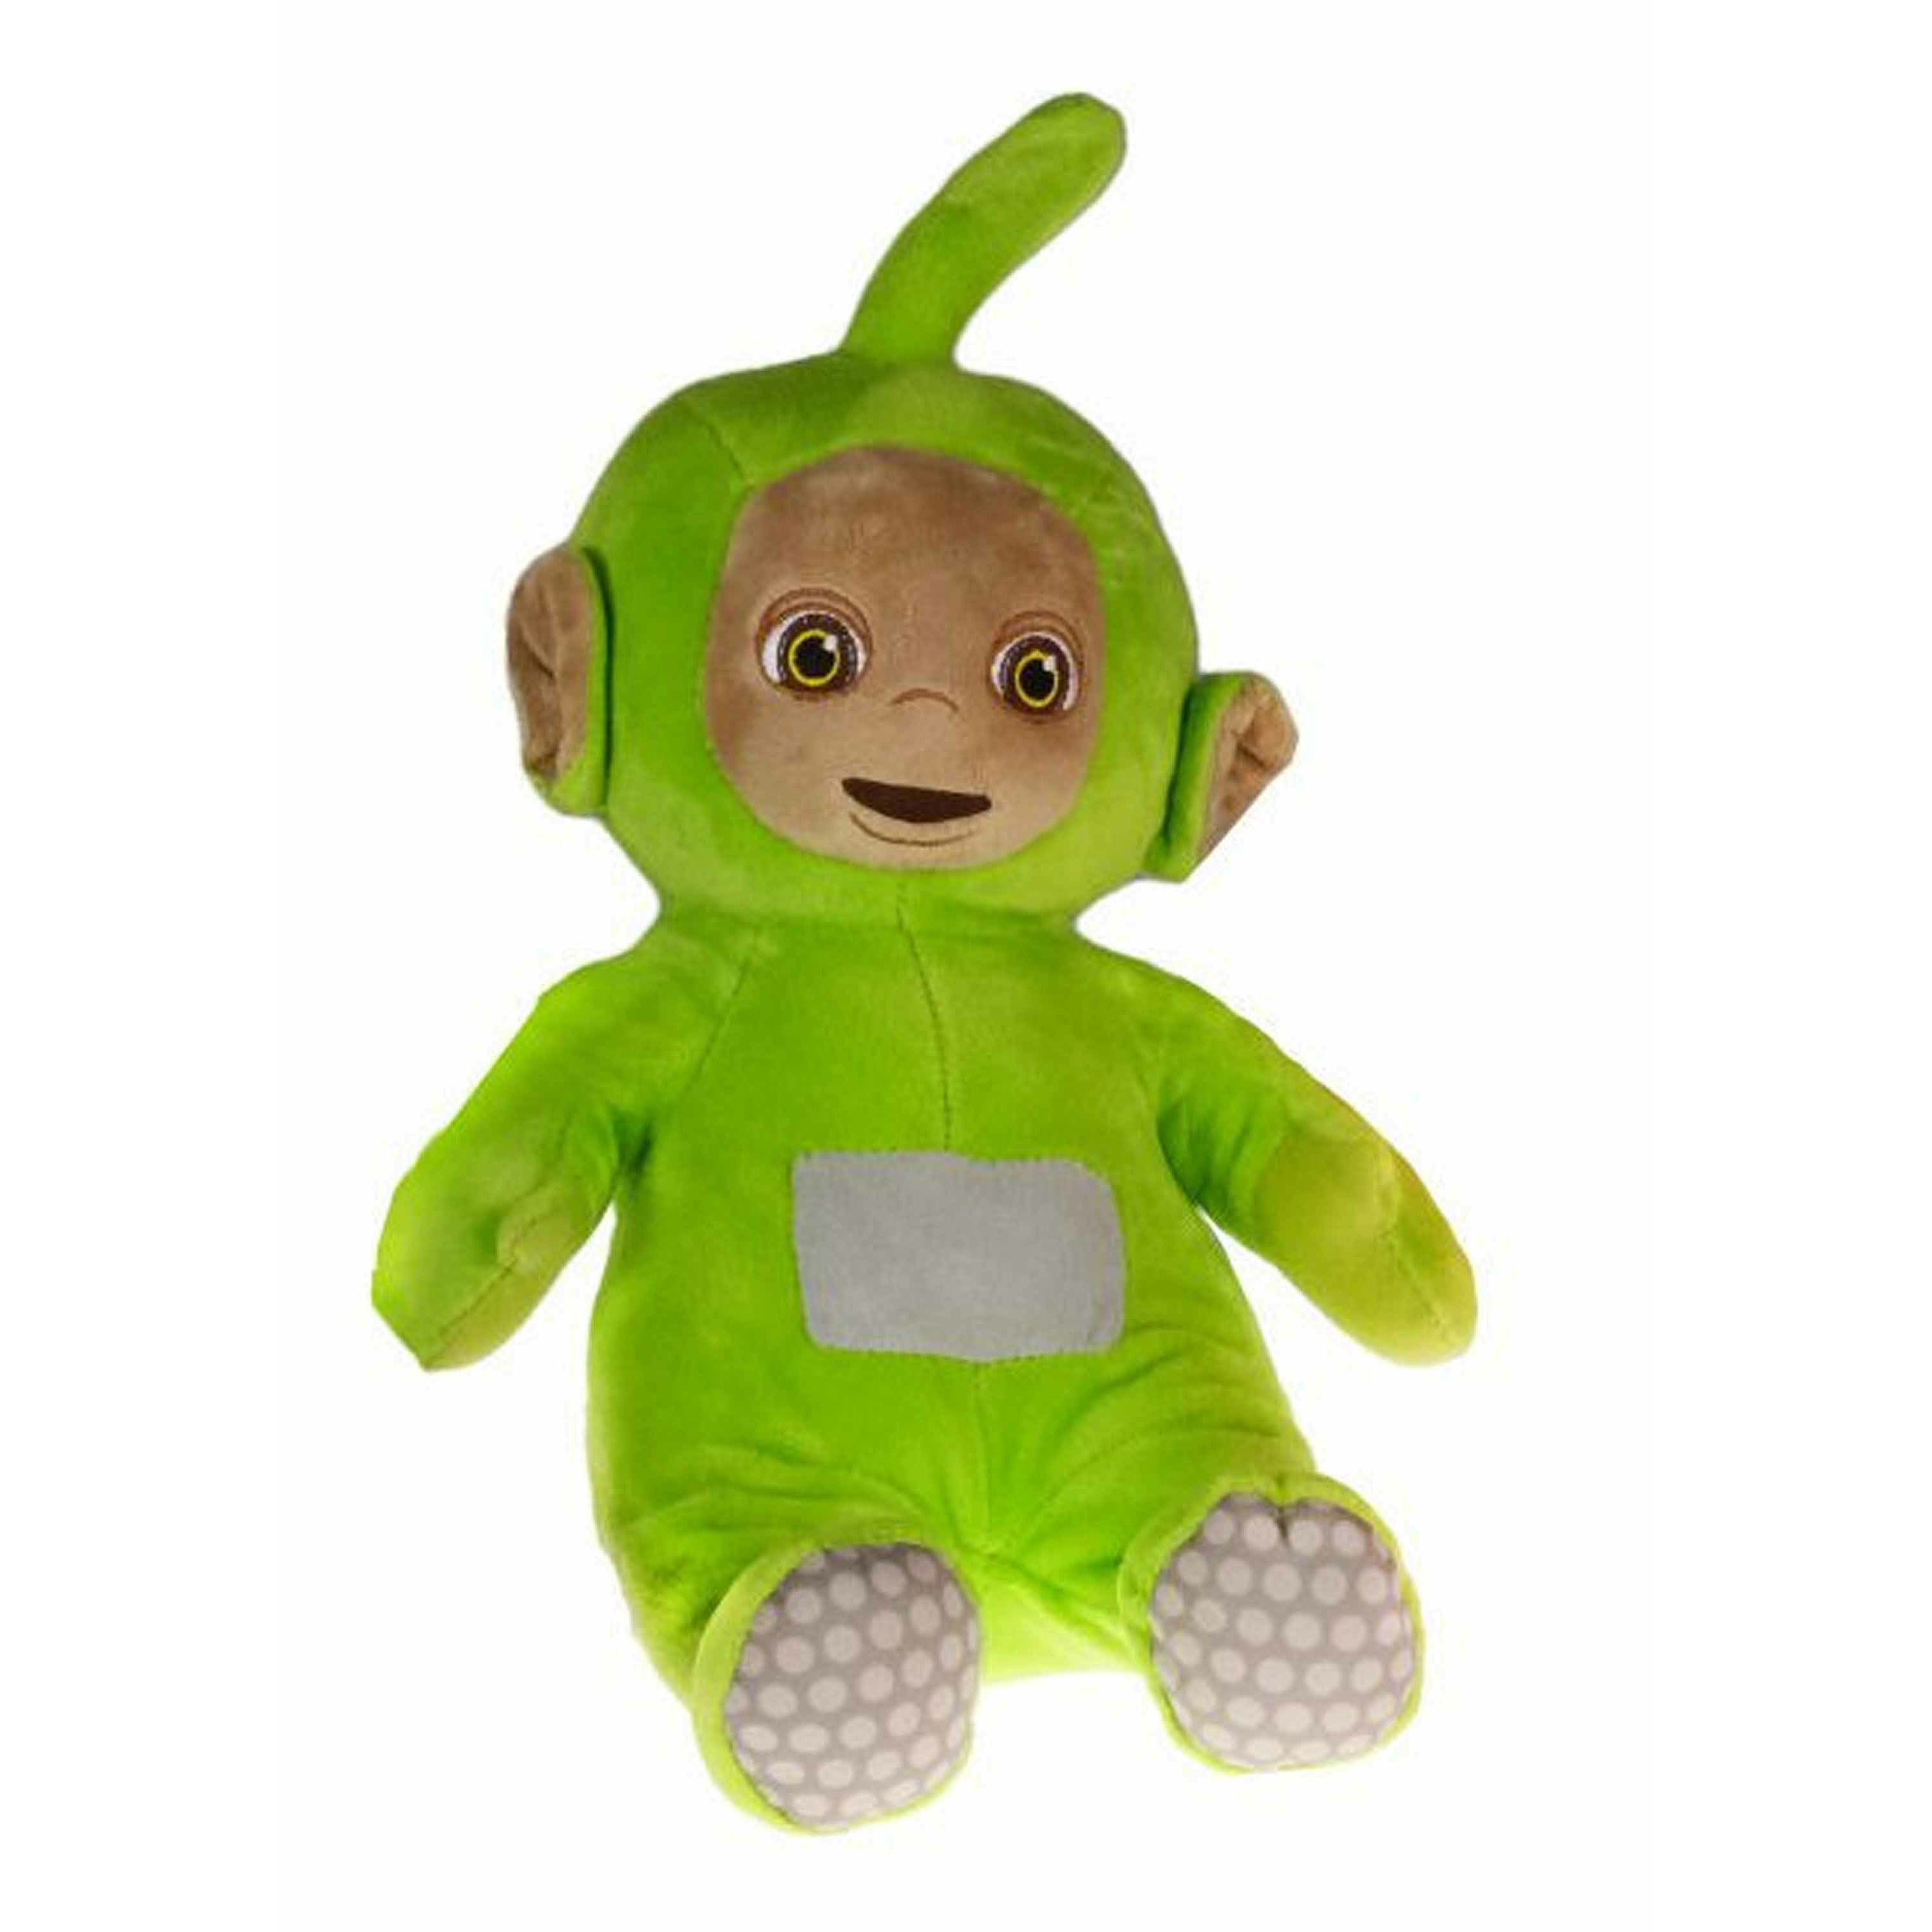 Pluche Teletubbies knuffel Dipsy - groen - 30 cm - Speelgoed